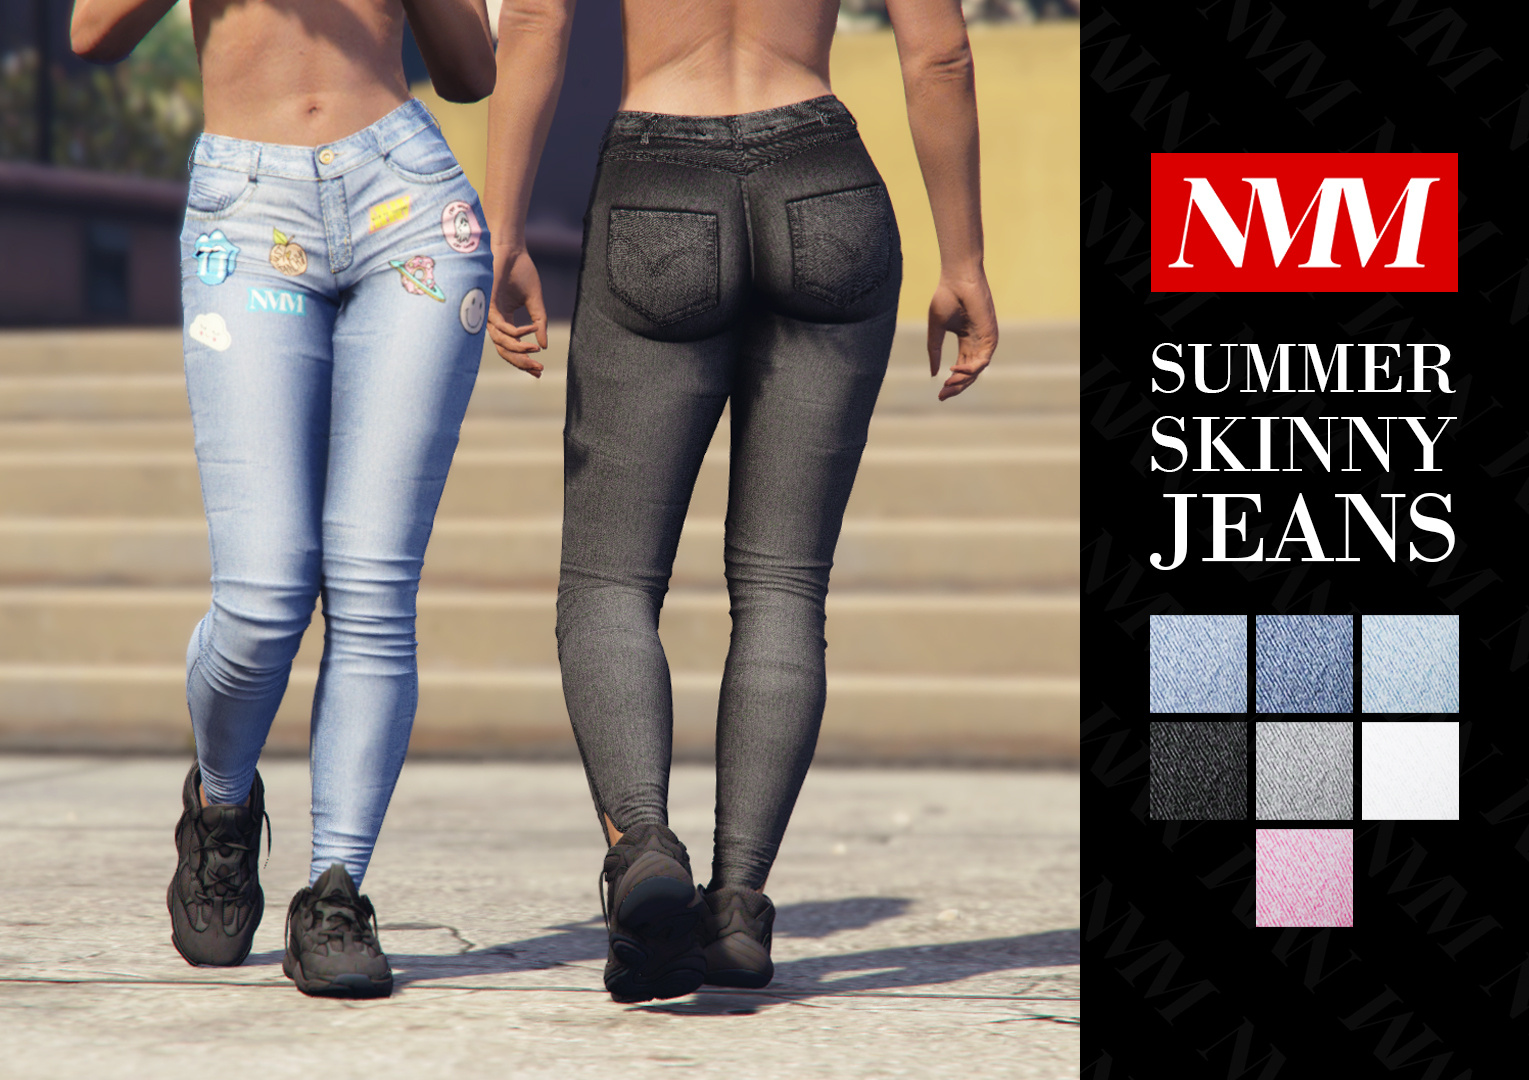 https://img.gta5-mods.com/q95/images/summer-skinny-jeans-for-mp-female-noticememods/e1129a-summerskinnyjeans.jpg